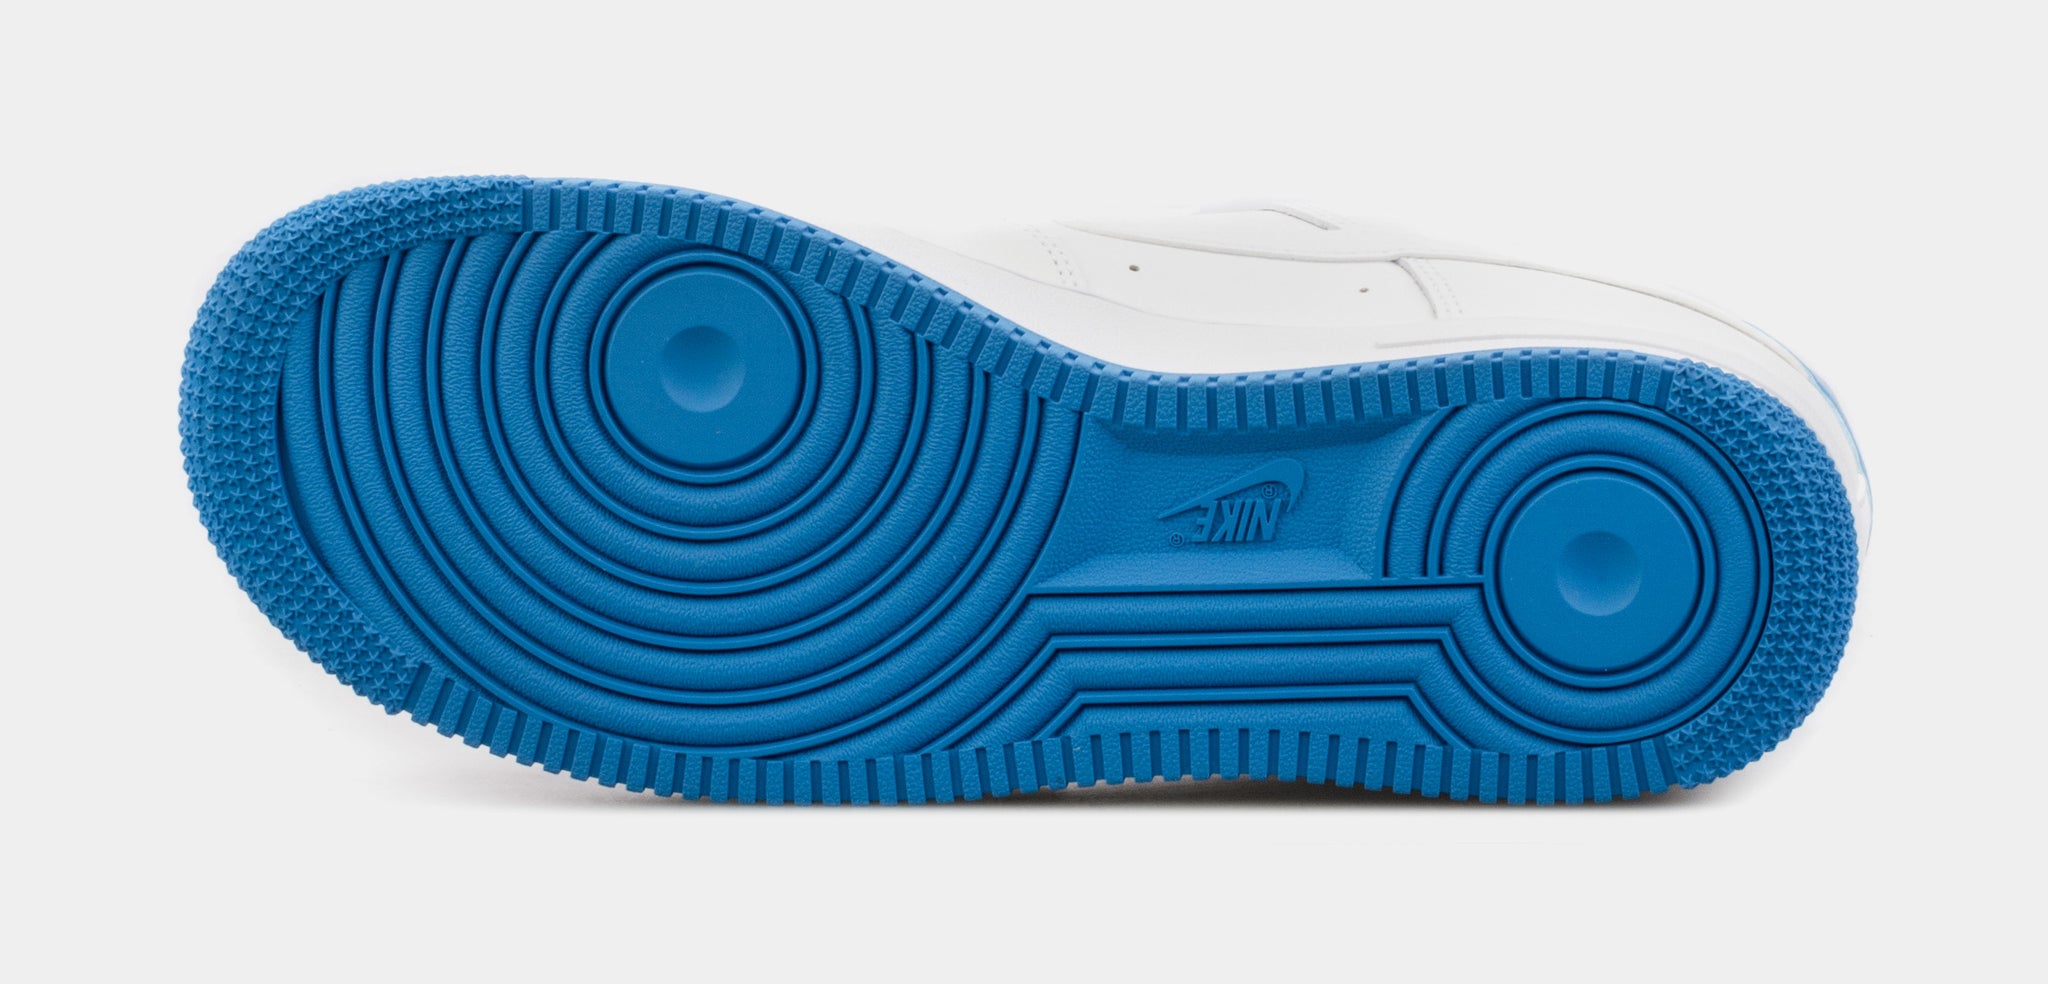 Nike Air Force 1 Type Shoes (white/white white)